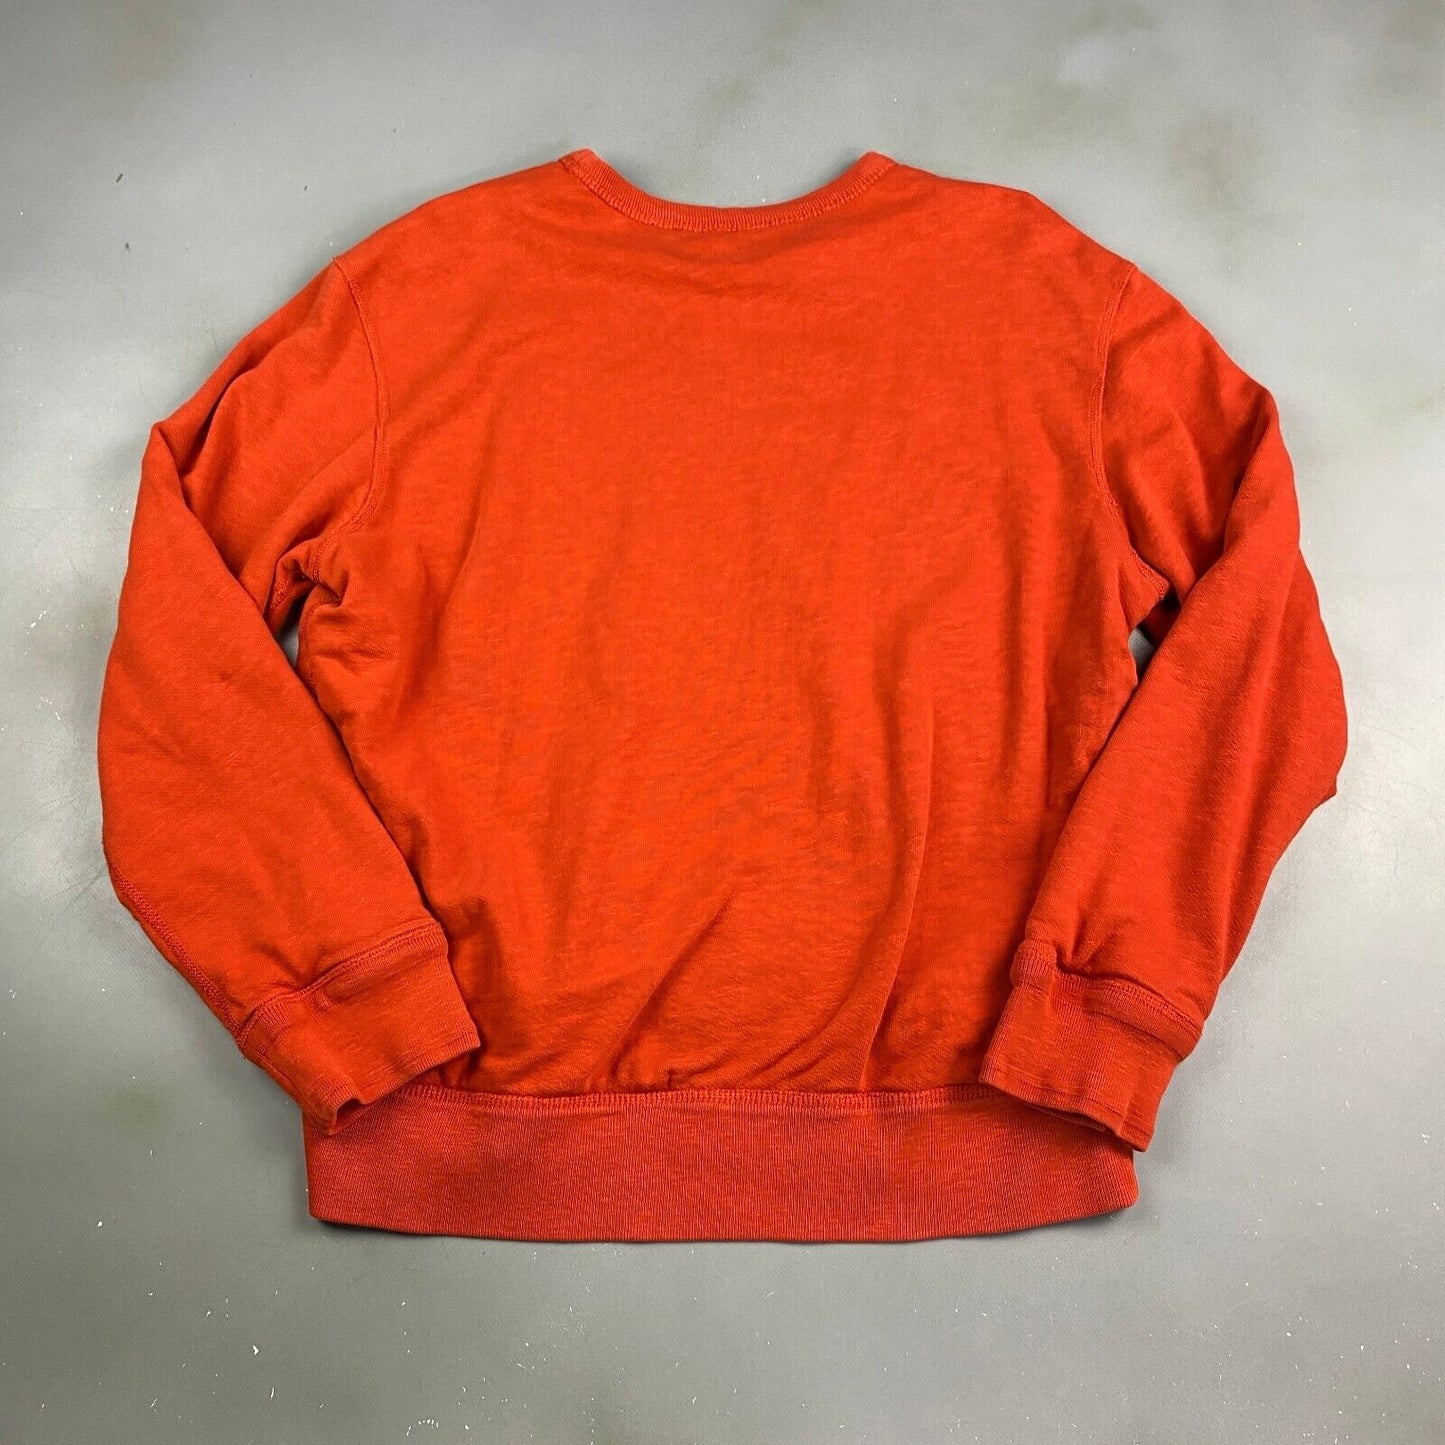 VINTAGE Ralph Lauren POLO Orange Thermal Lined Crewneck Sweater sz Large Adult